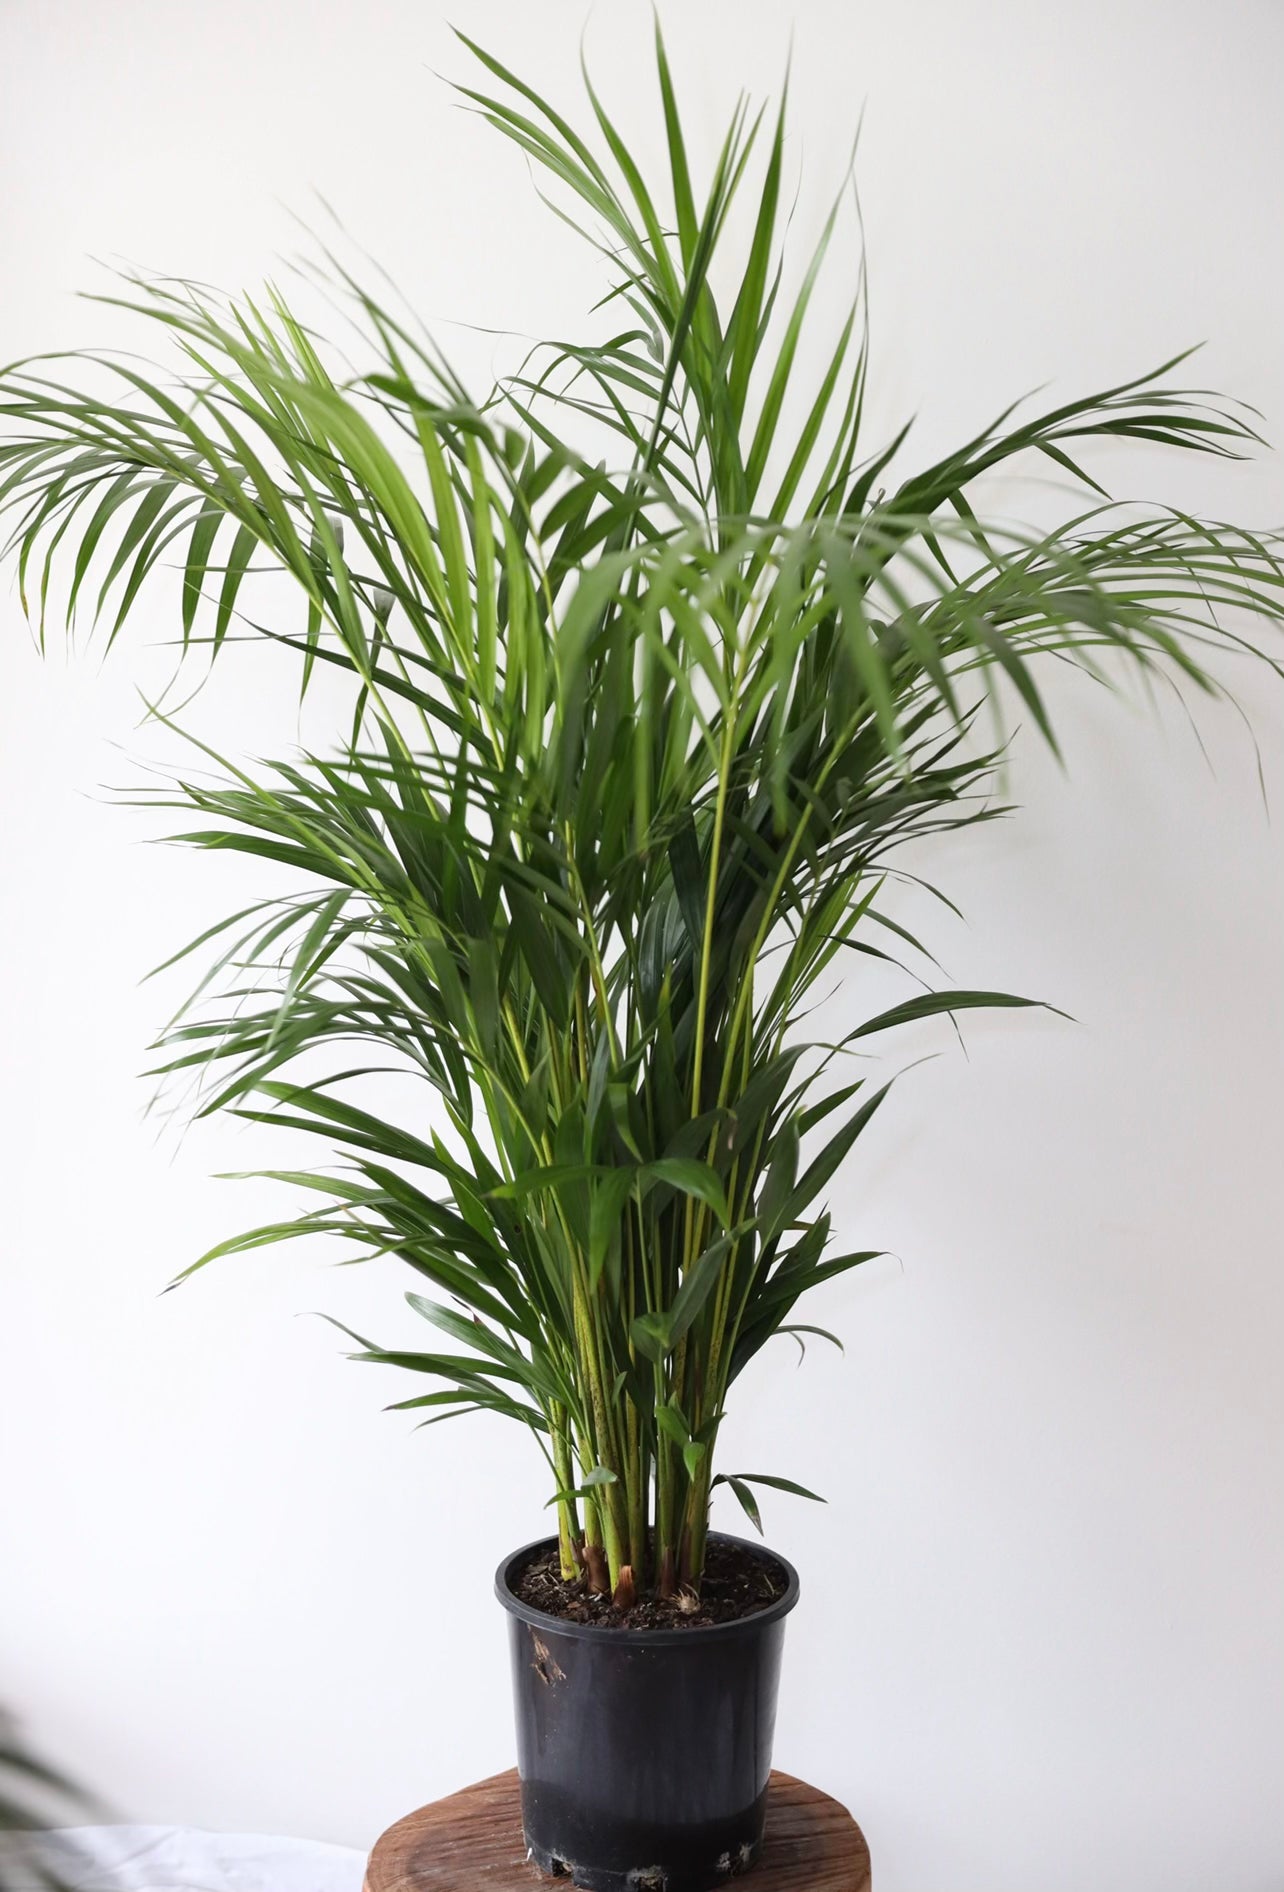 The Golden Cane Palm Plant (Dypsis Lutescens)